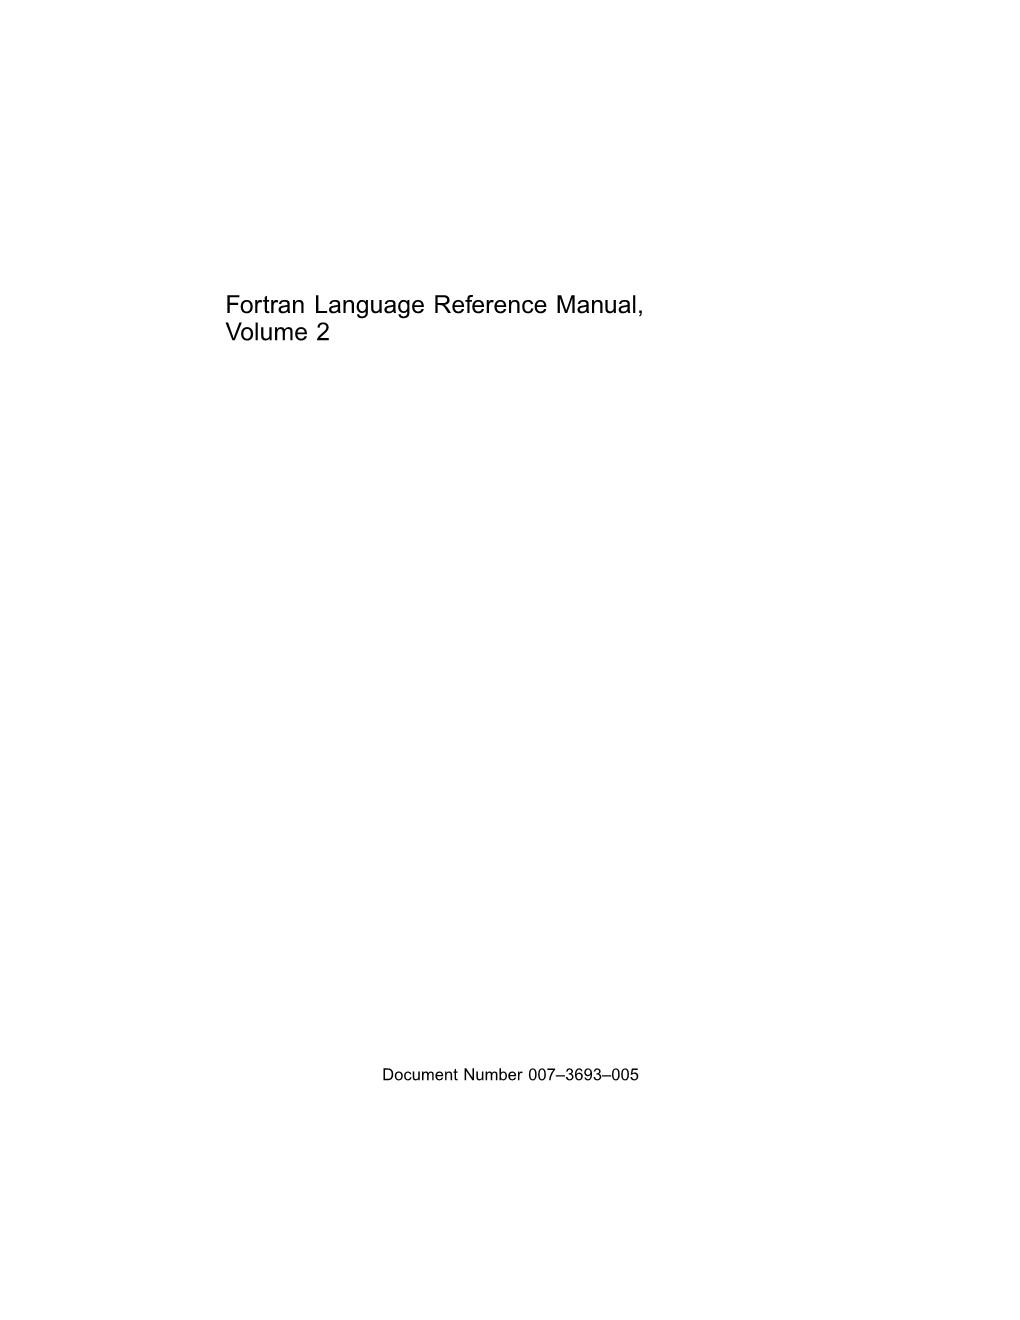 Fortran Language Reference Manual (Vol. 2)